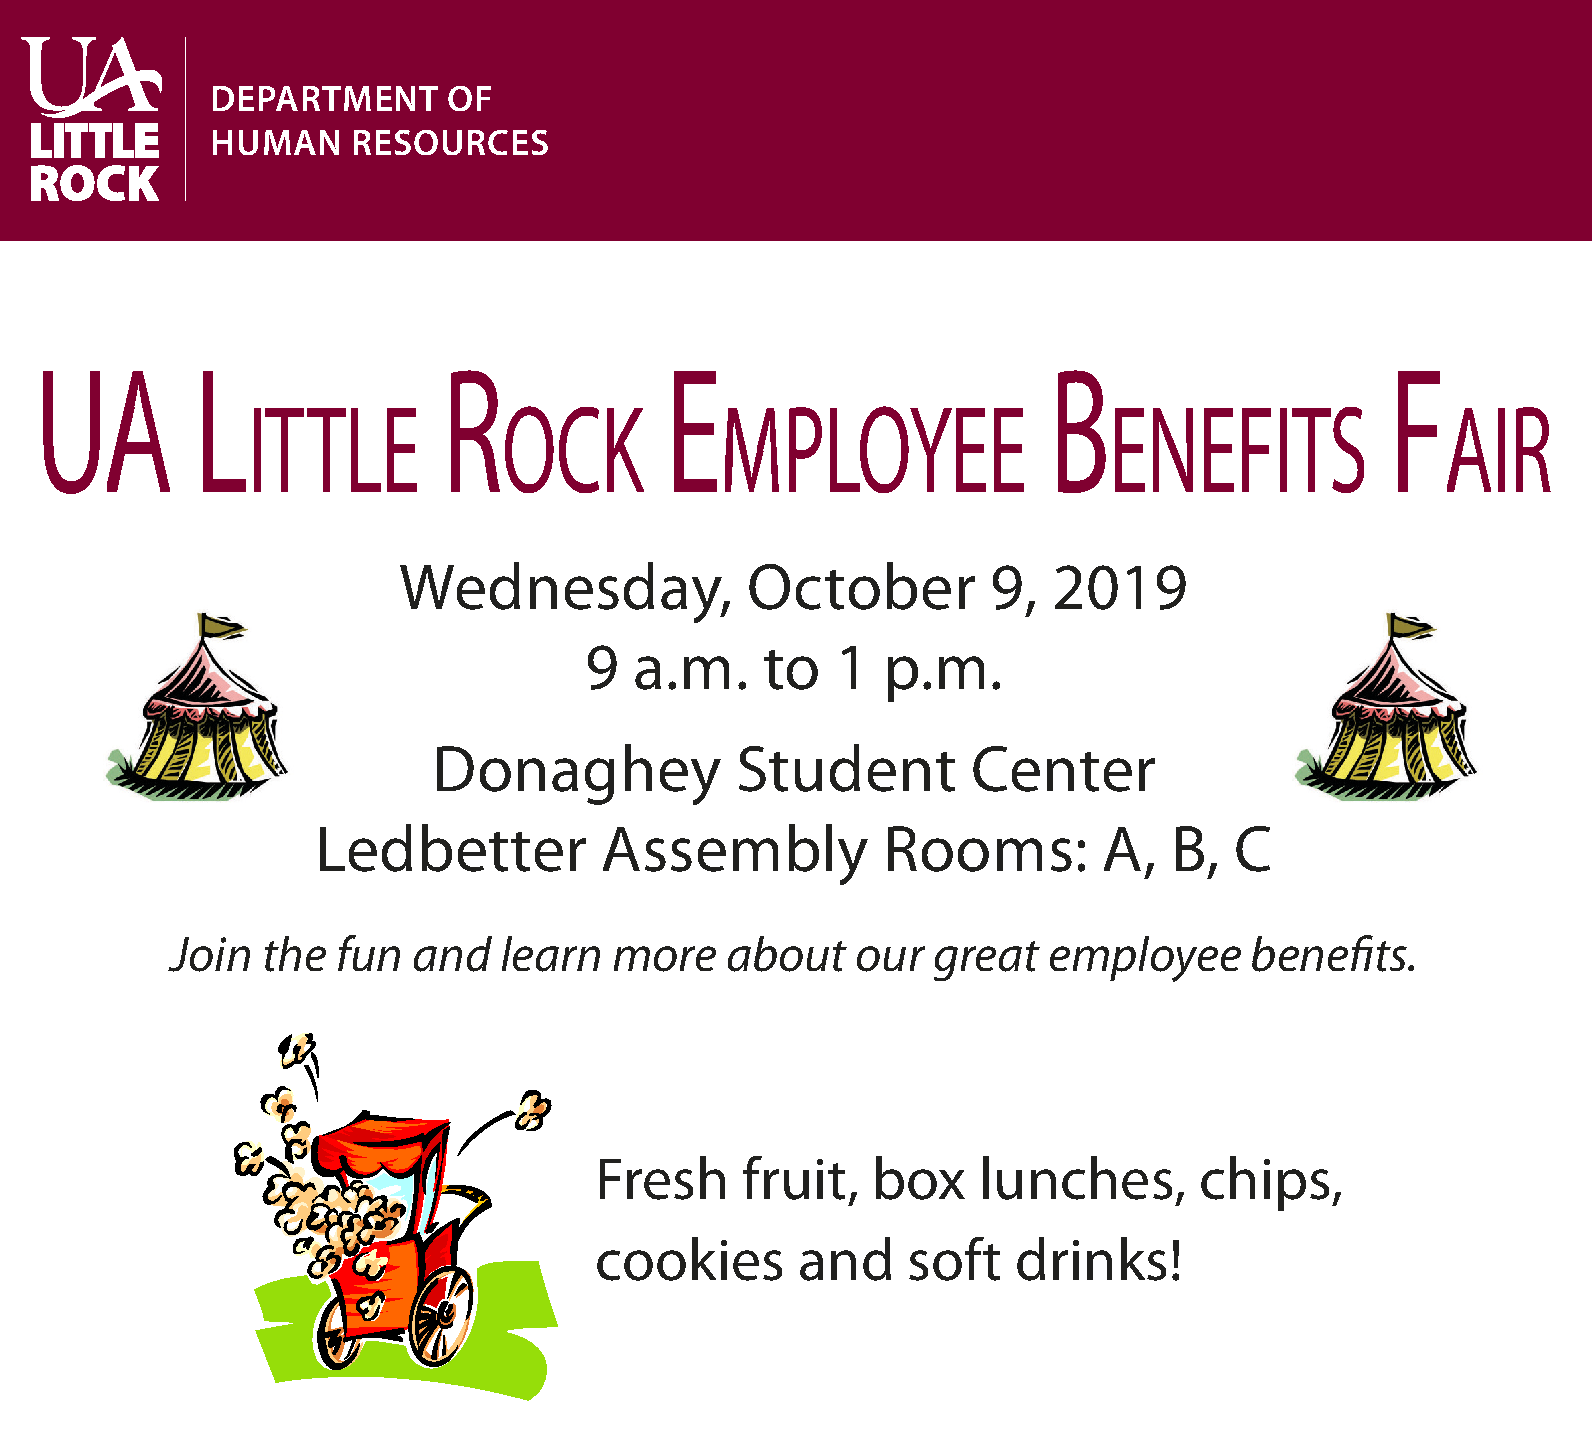 2019 Employee Benefits Fair flyer from the UA Little Rock Department Human Resources